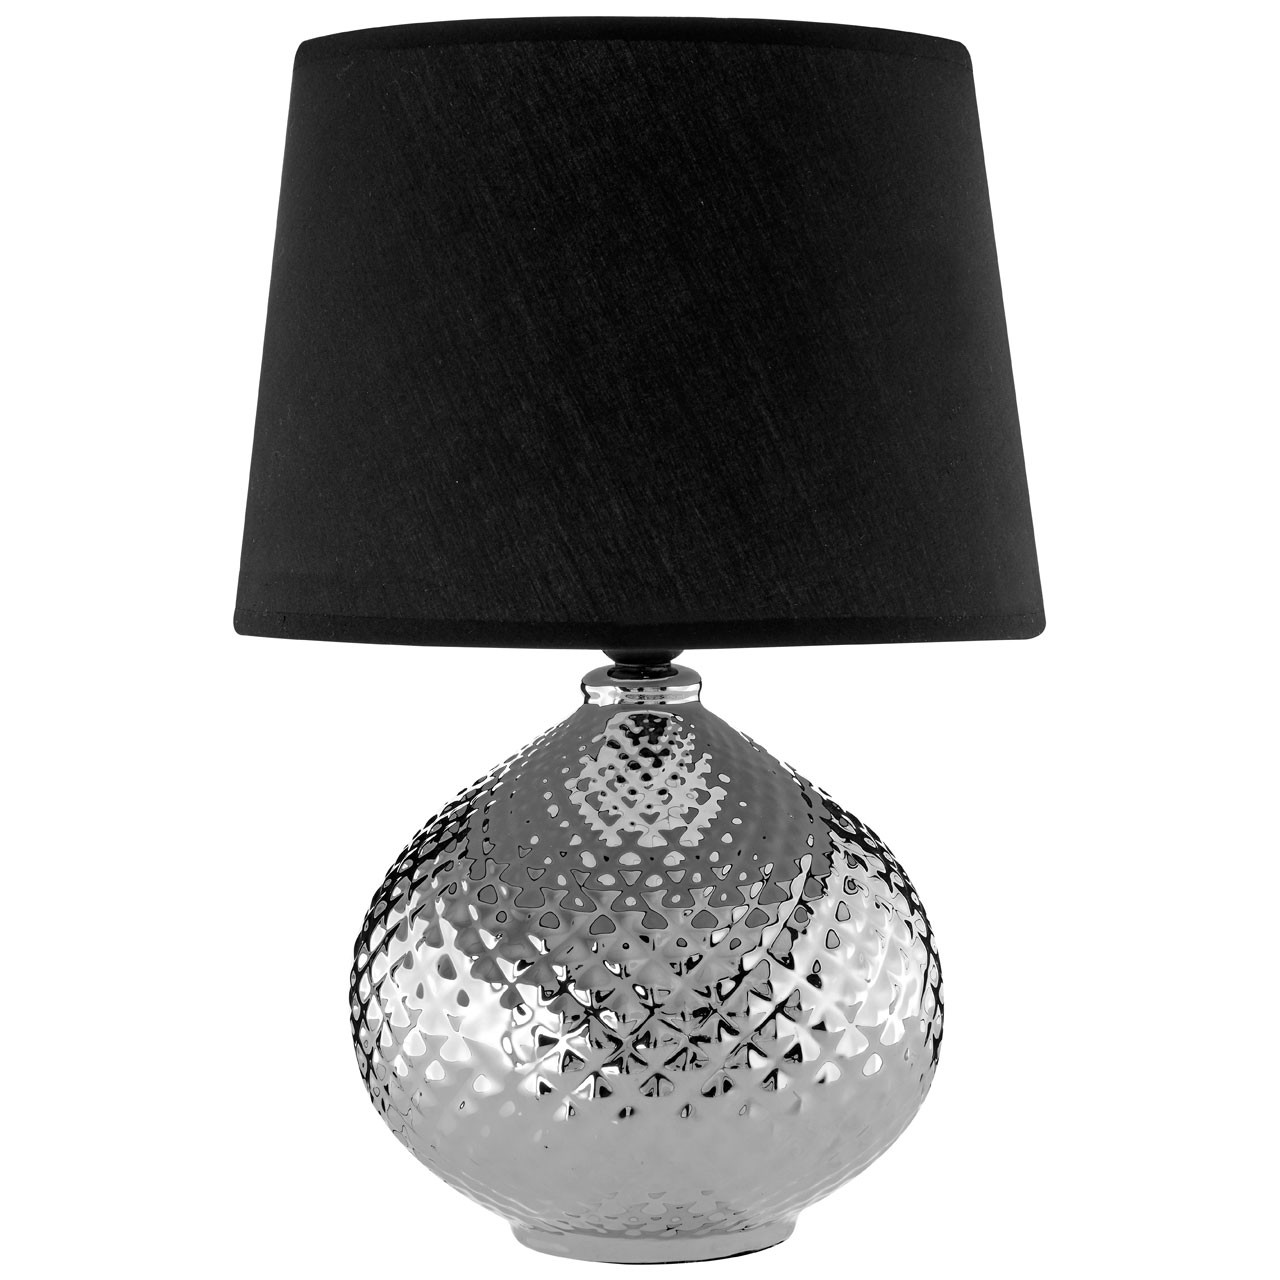 Prime Furnishing Hetty Table Lamp, Silver Ceramic - Black Shade